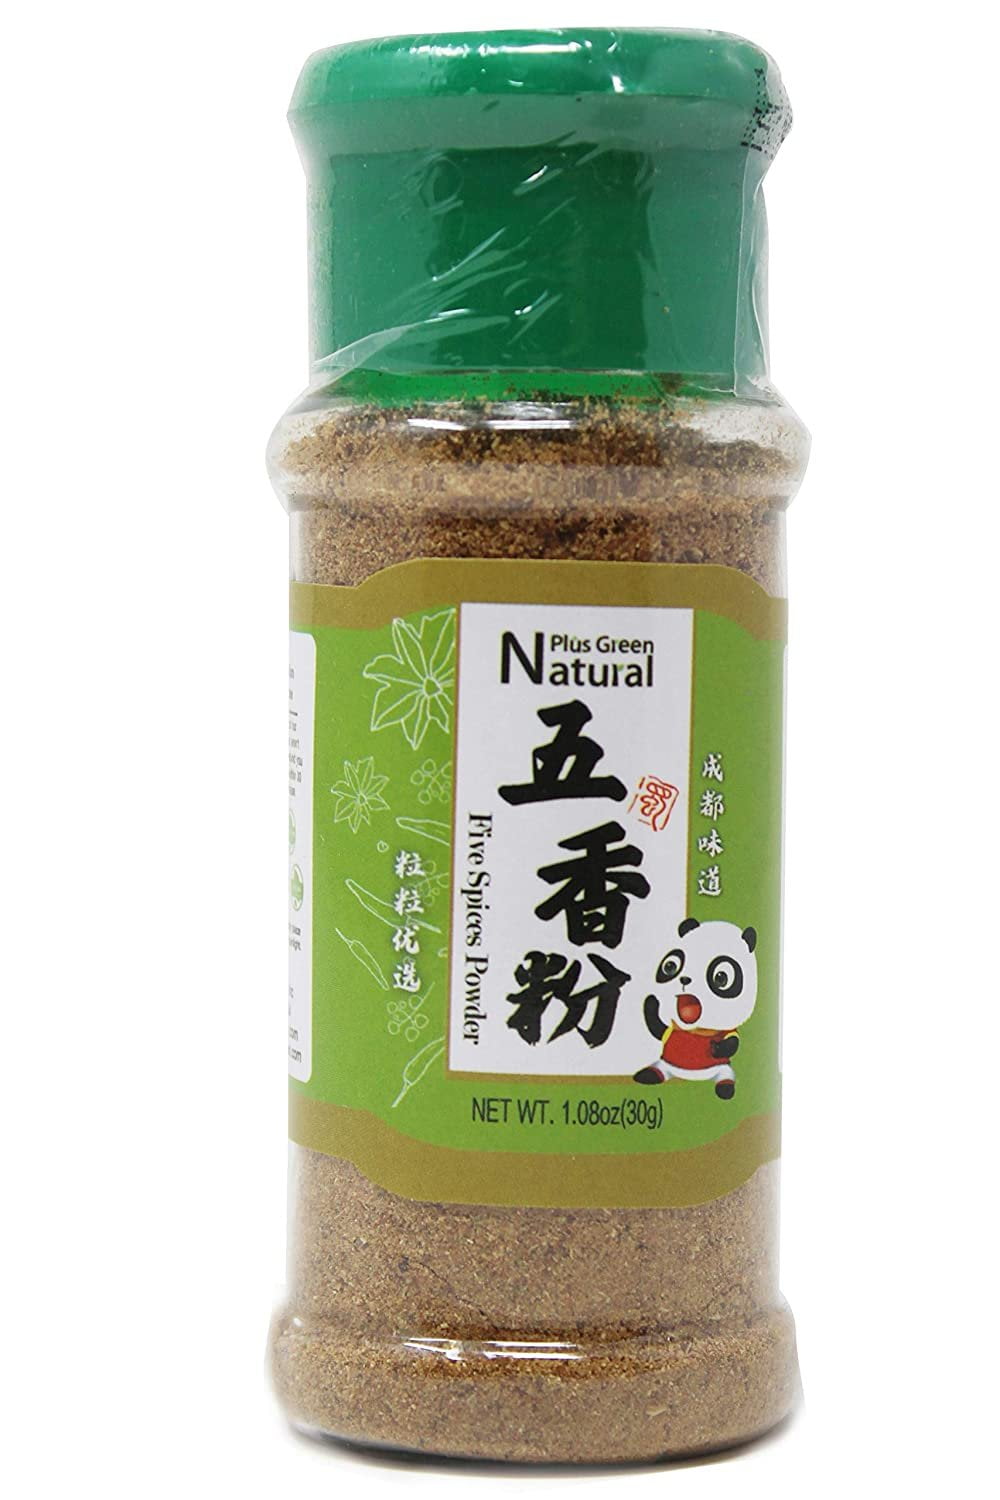 Chinese 5 Spice Powder Recipe - China Sichuan Food